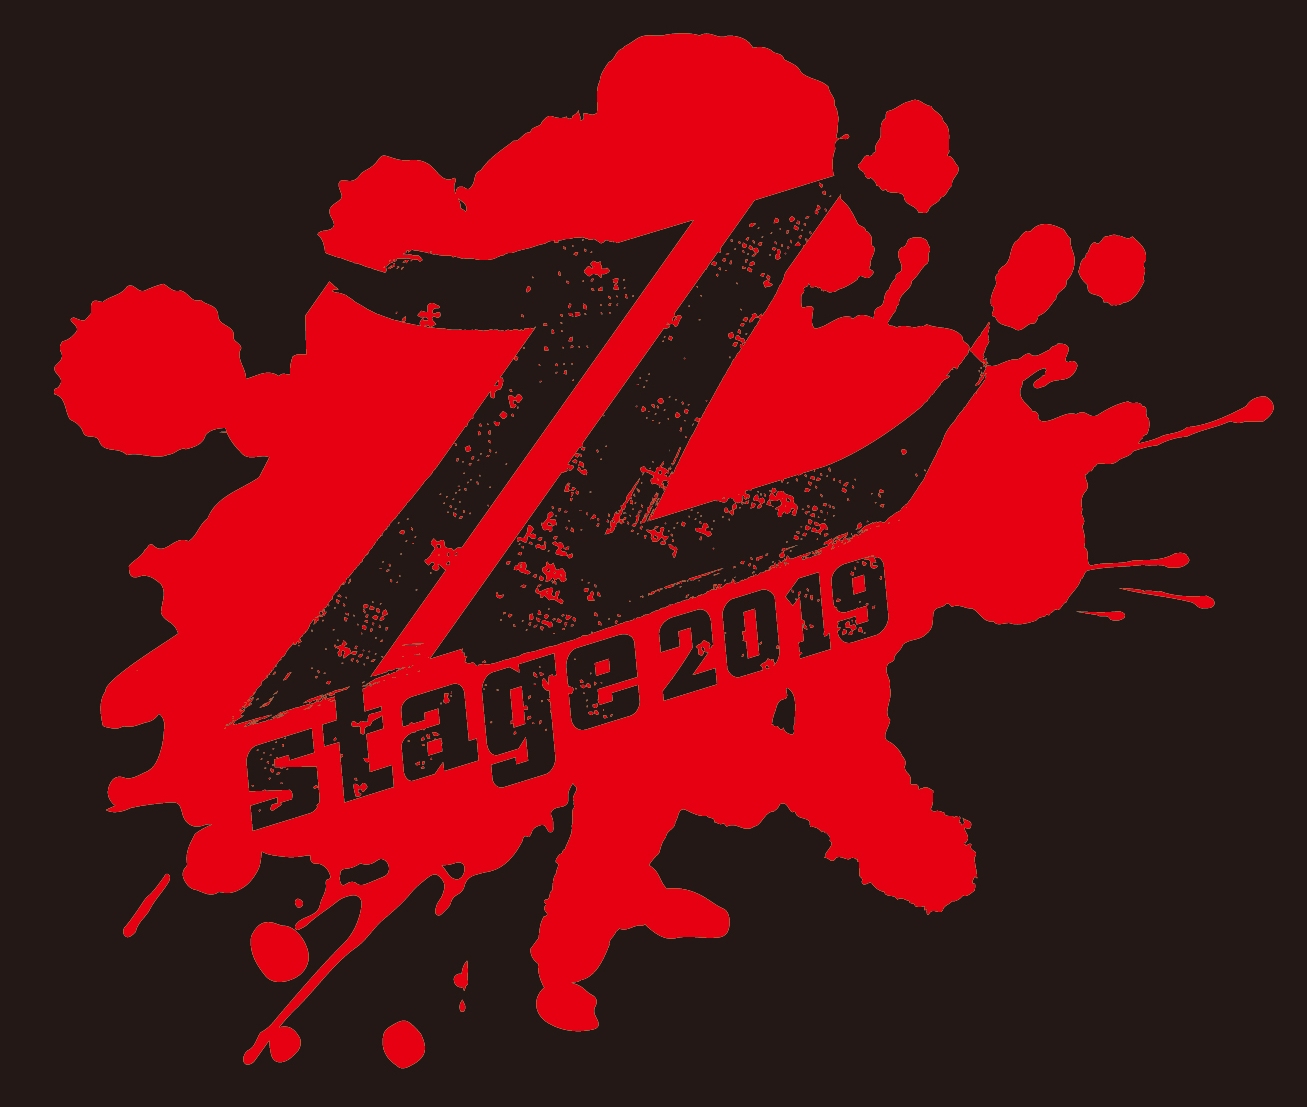 Z Stage ｾﾞｰﾀｽﾃｰｼﾞ 19 関西シーバス チヌbattle Apia試投会大阪 開催 News Apia アピア